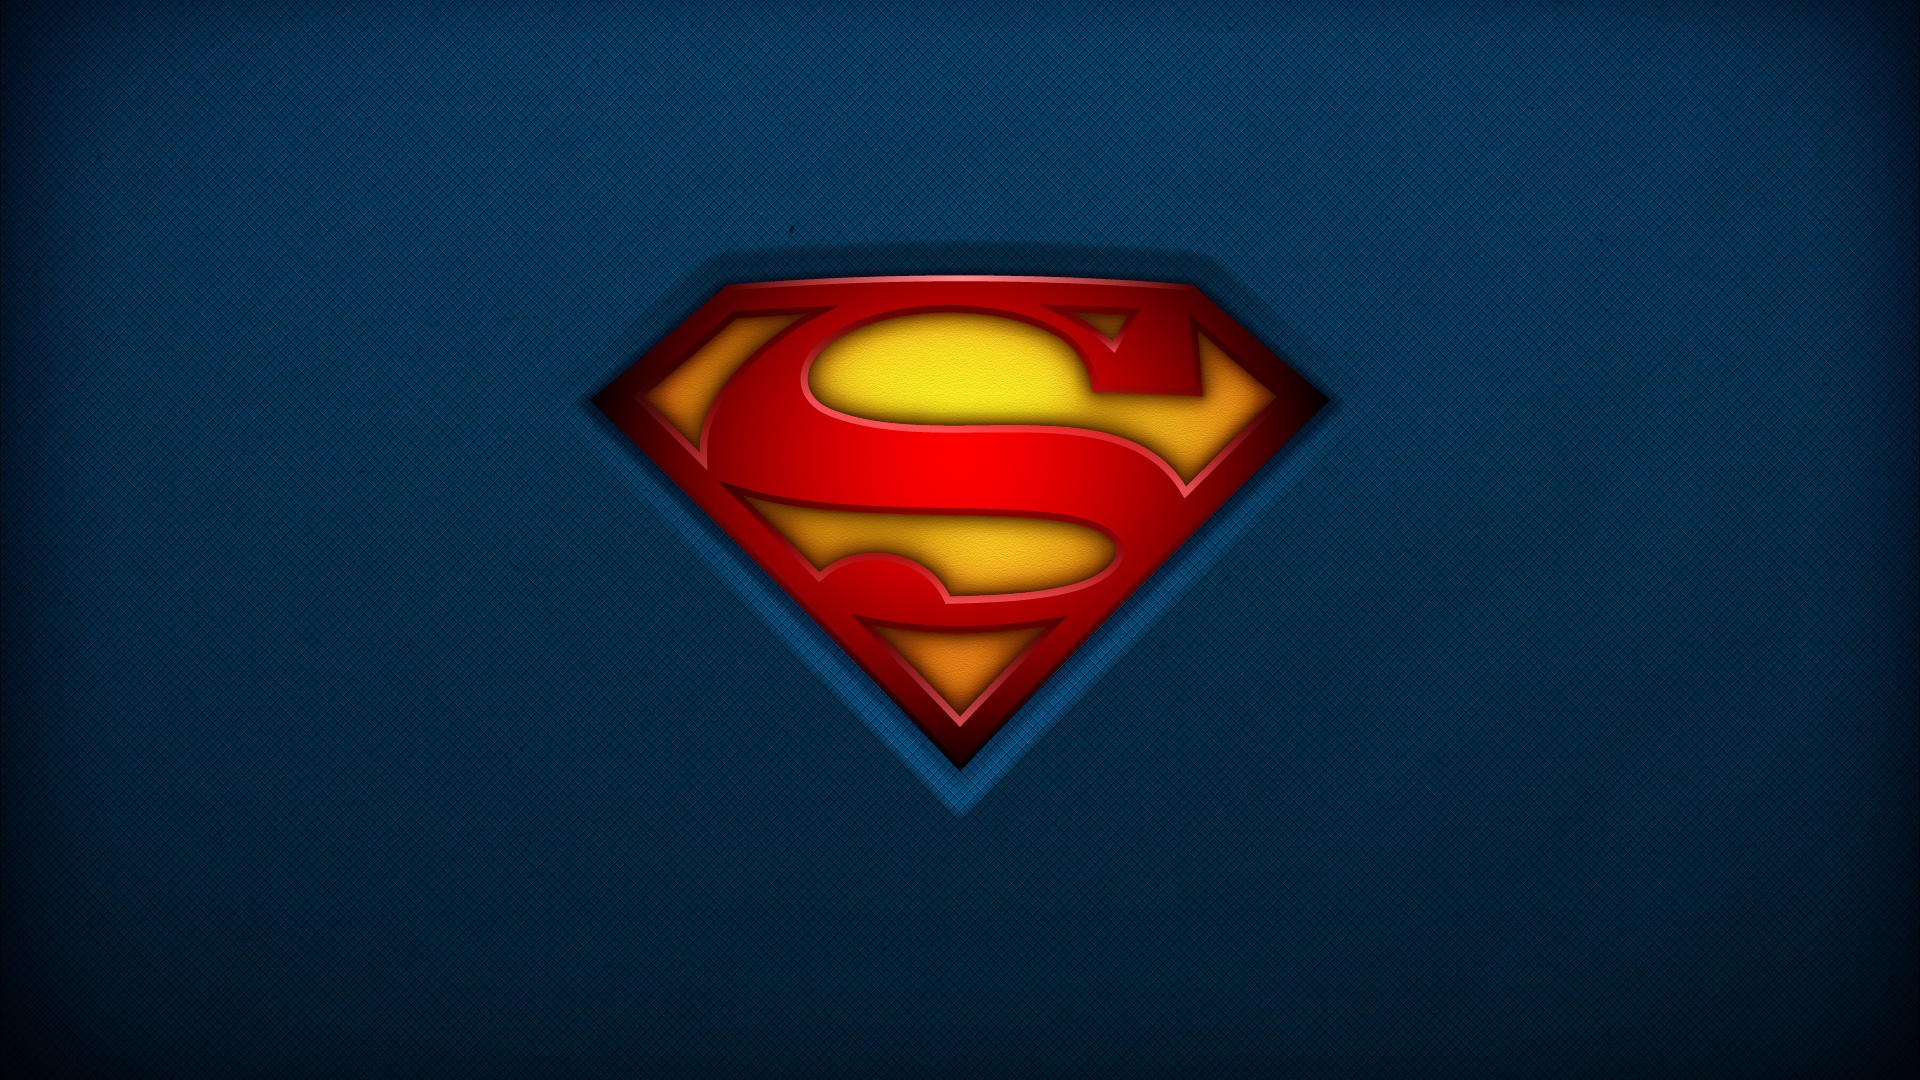 Superman logo wallpaper hd 1920x1080 | danasrge.top